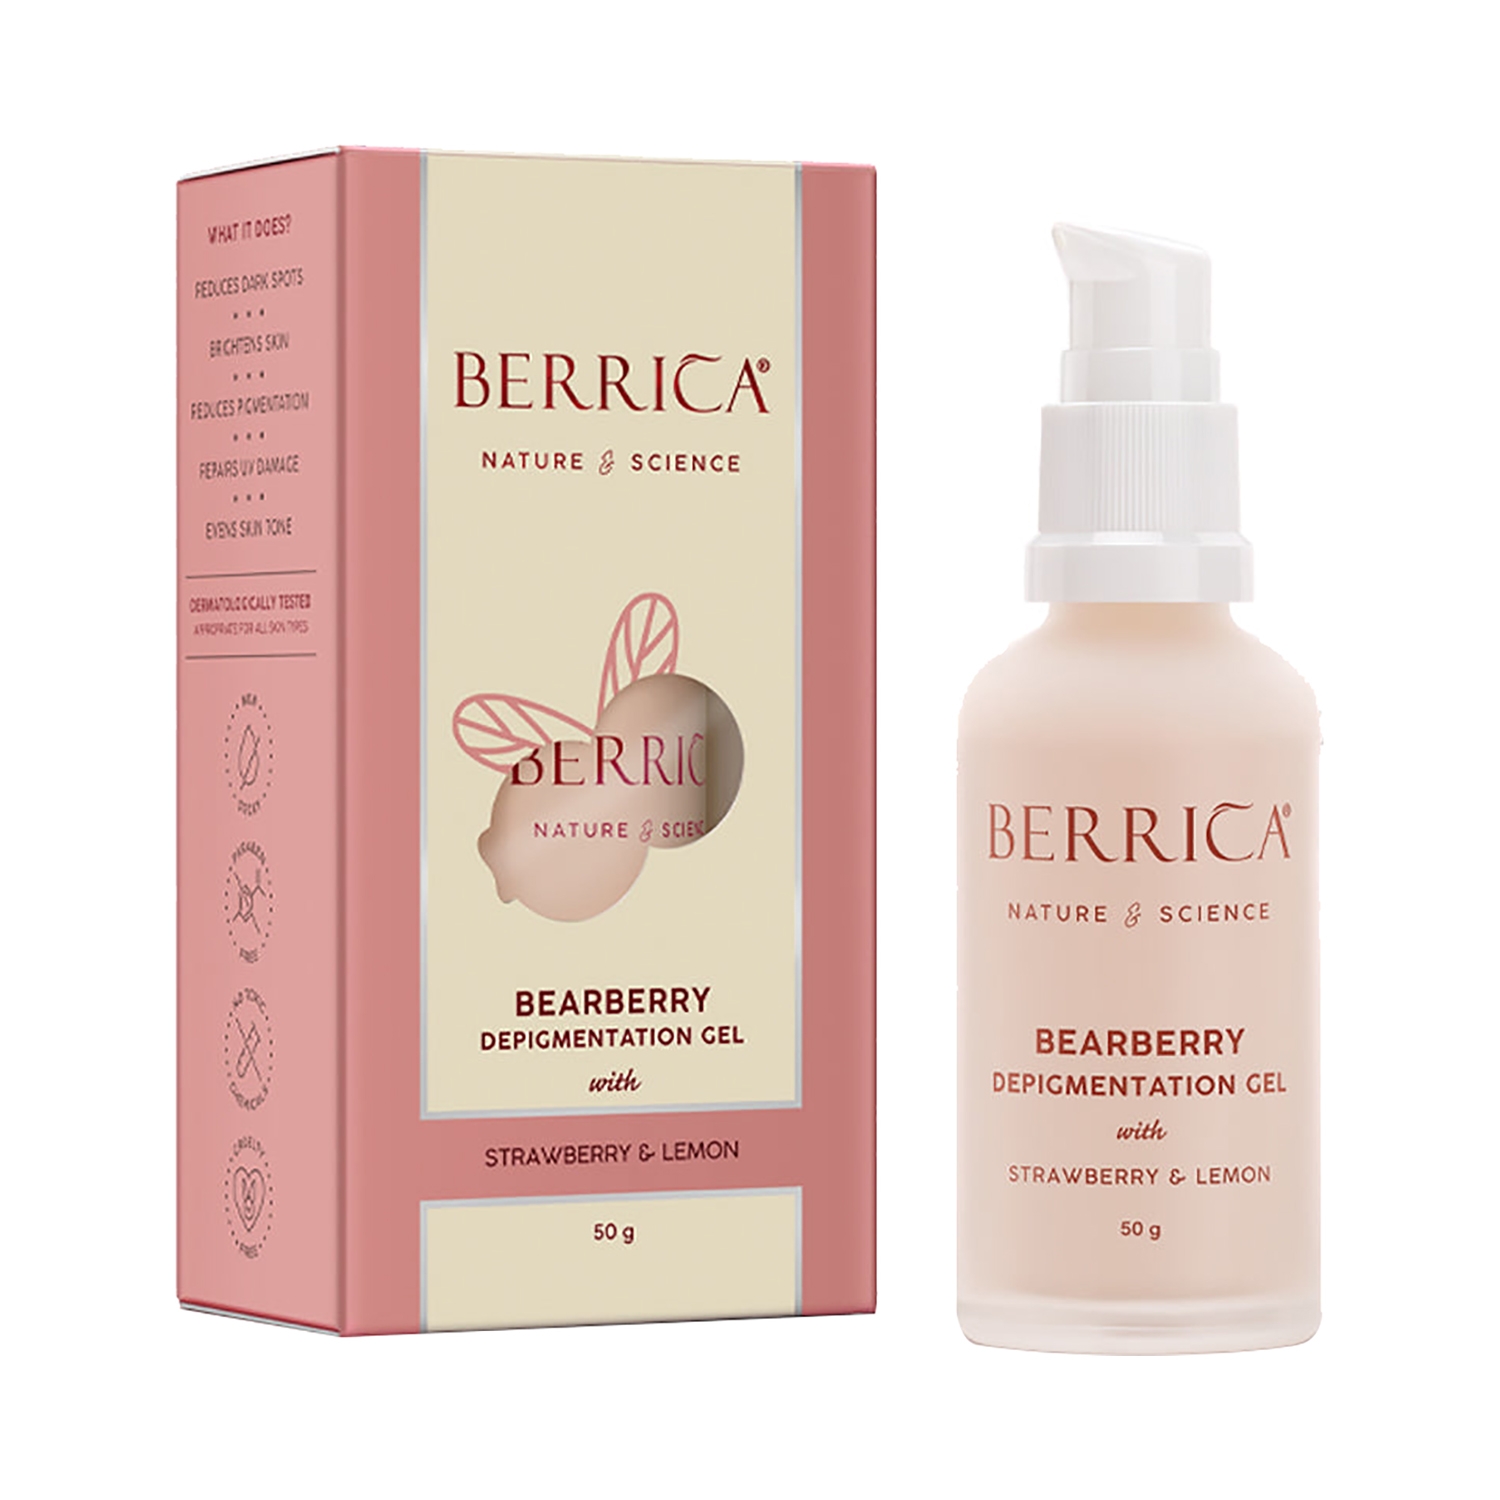 Berrica Bearberry Depigmentation Gel (50g)